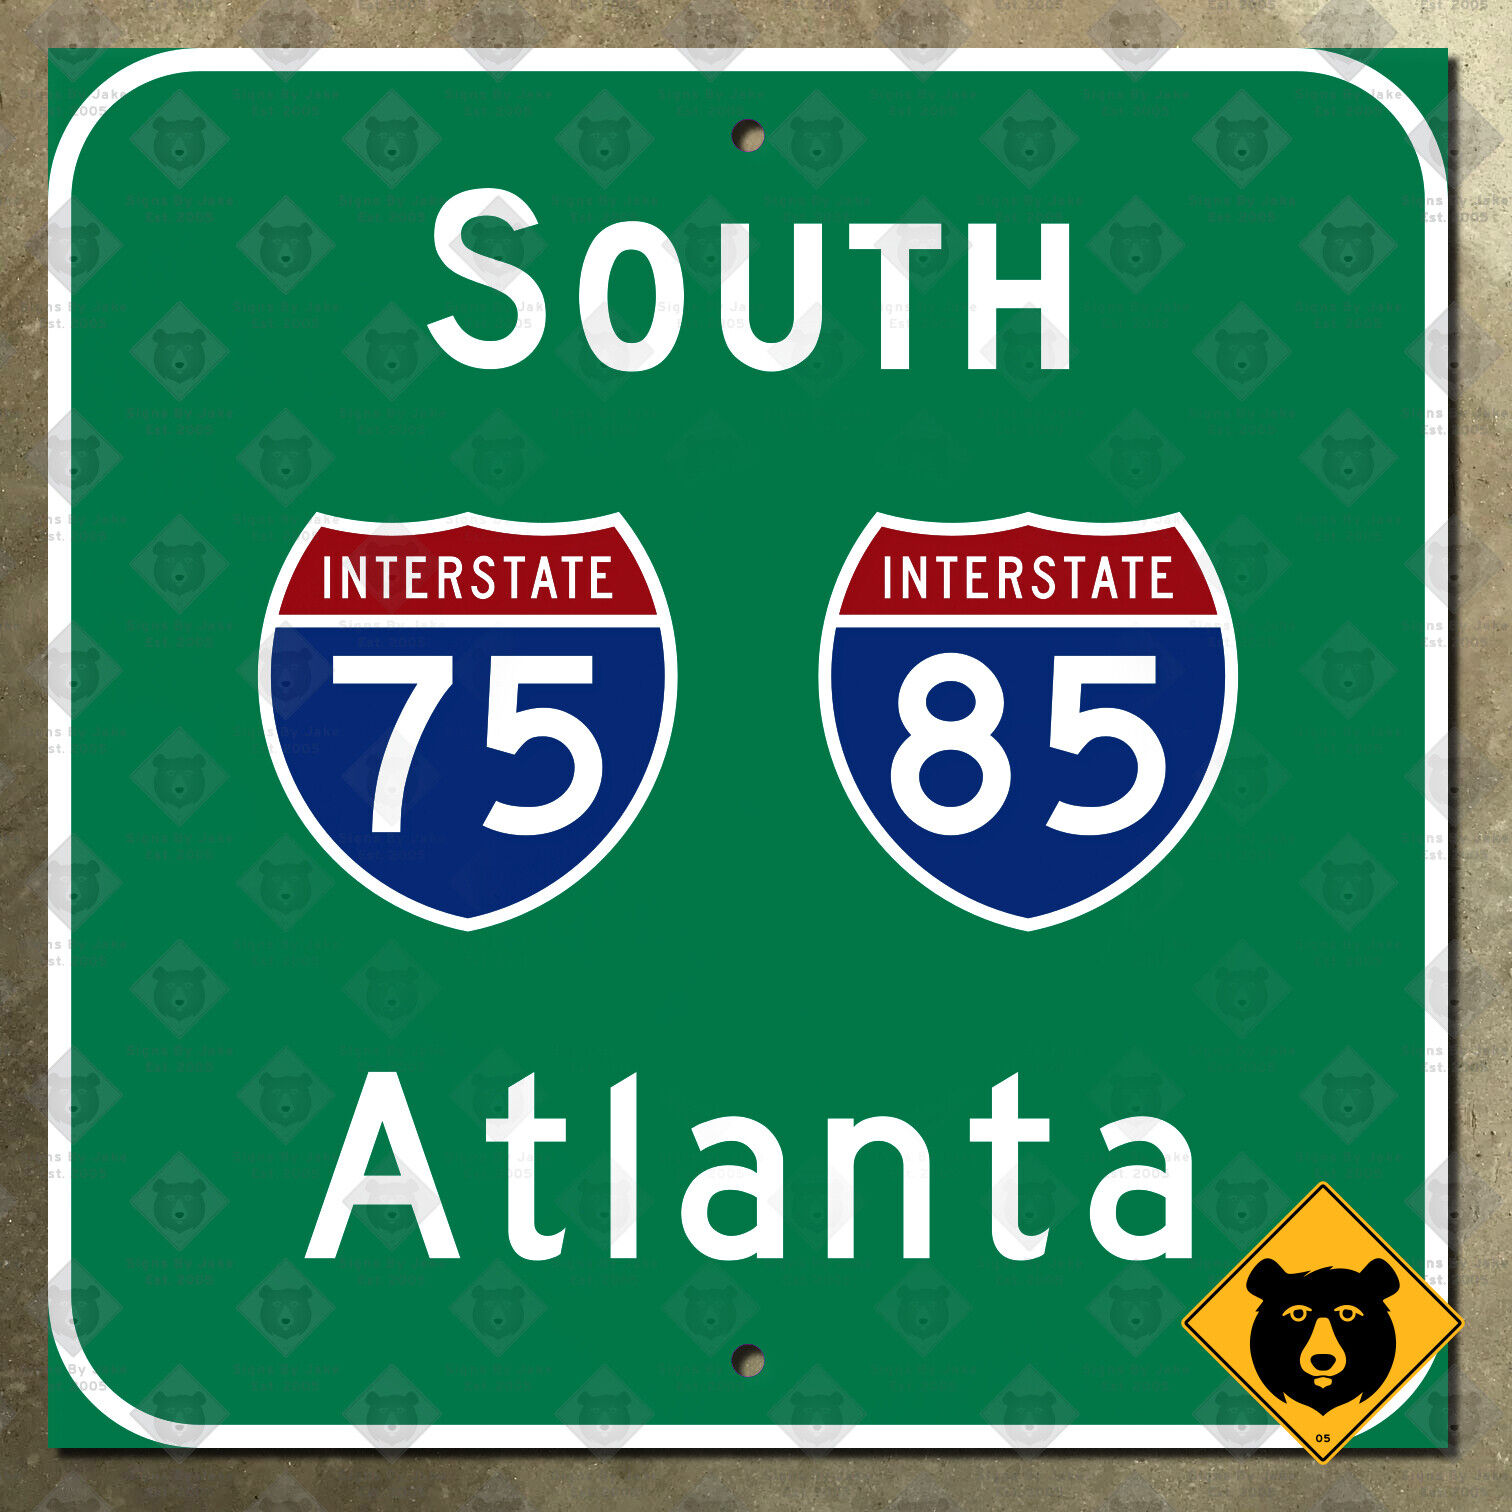 Interstate 75/85 south Atlanta Georgia highway road sign 1990 freeway 12x12